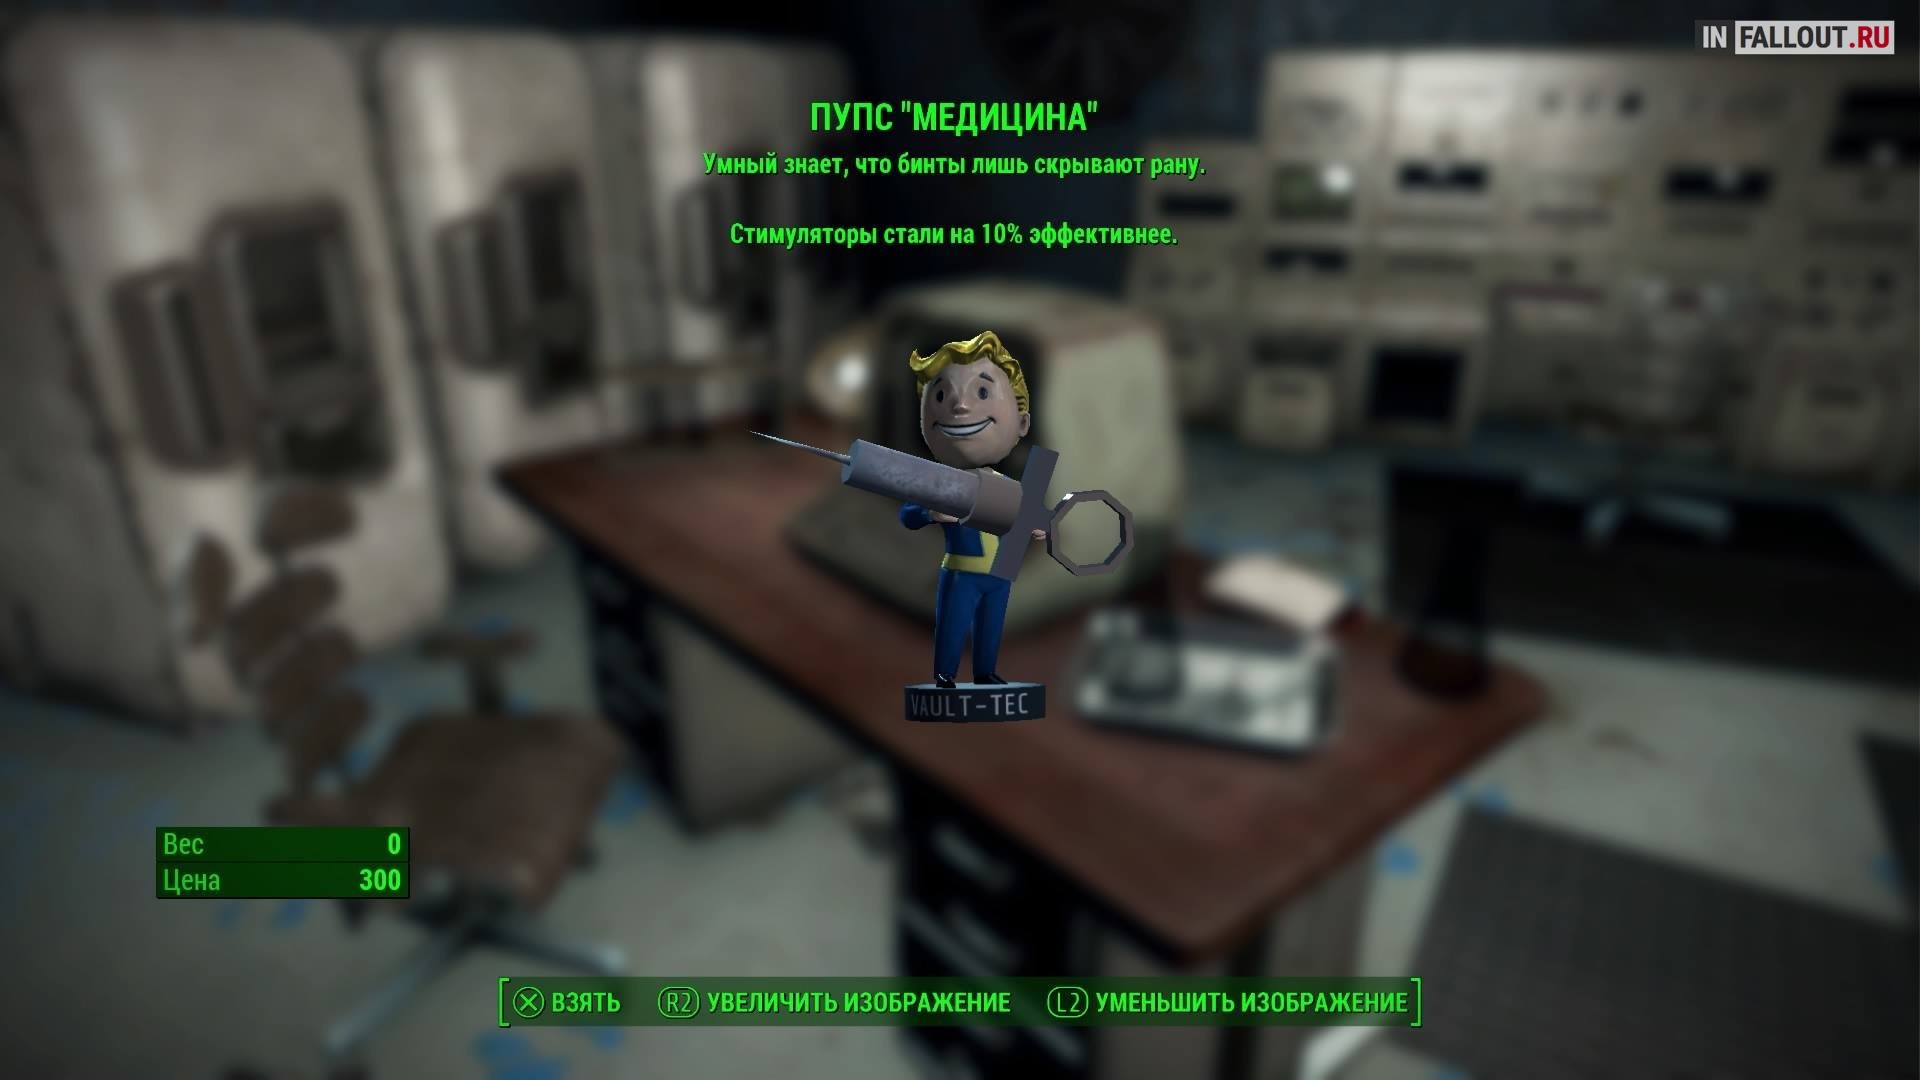 Пупс где найти. Убежище 81 Fallout 4 пупс медицина. Пупс харизма Fallout 4. Fallout 4 пупс бартер. Пупс интеллект Fallout 4 местонахождение.